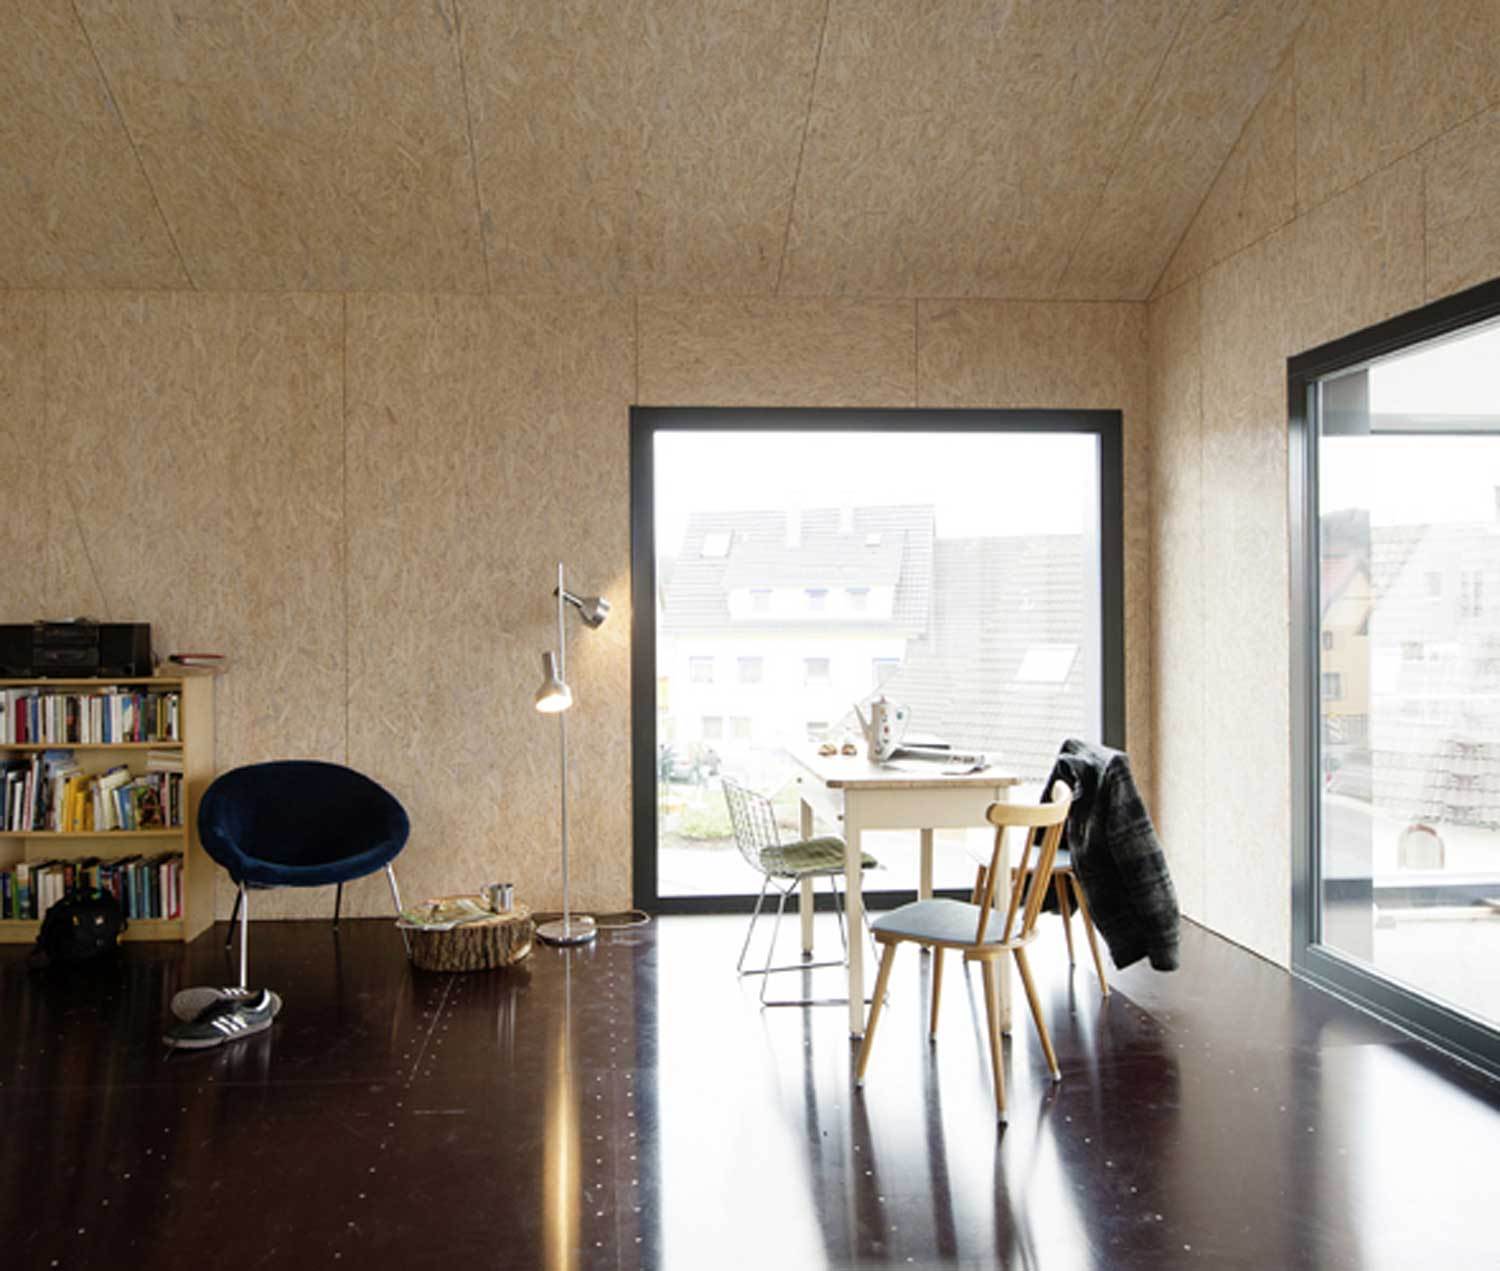 Casa-officina progettata nei dintorni di Tubinga dagli studi tedeschi Fabian Evers Architecture e Wezel Architektur